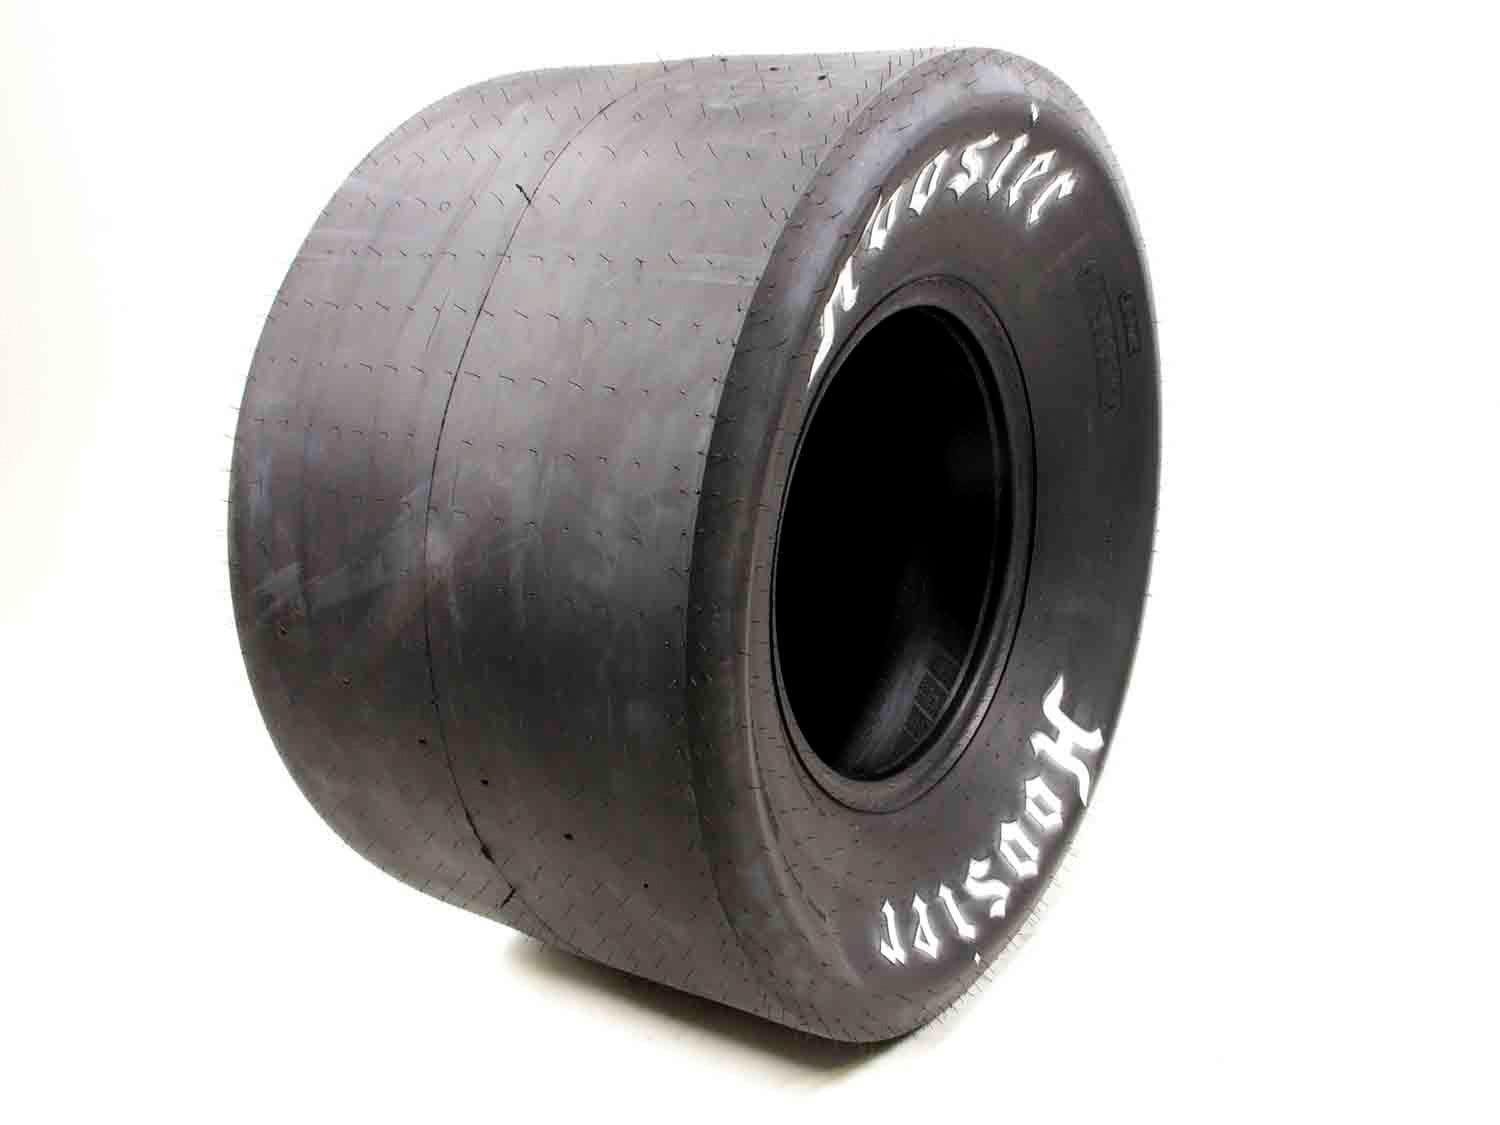 33.0/17-16 Drag Tire - Burlile Performance Products